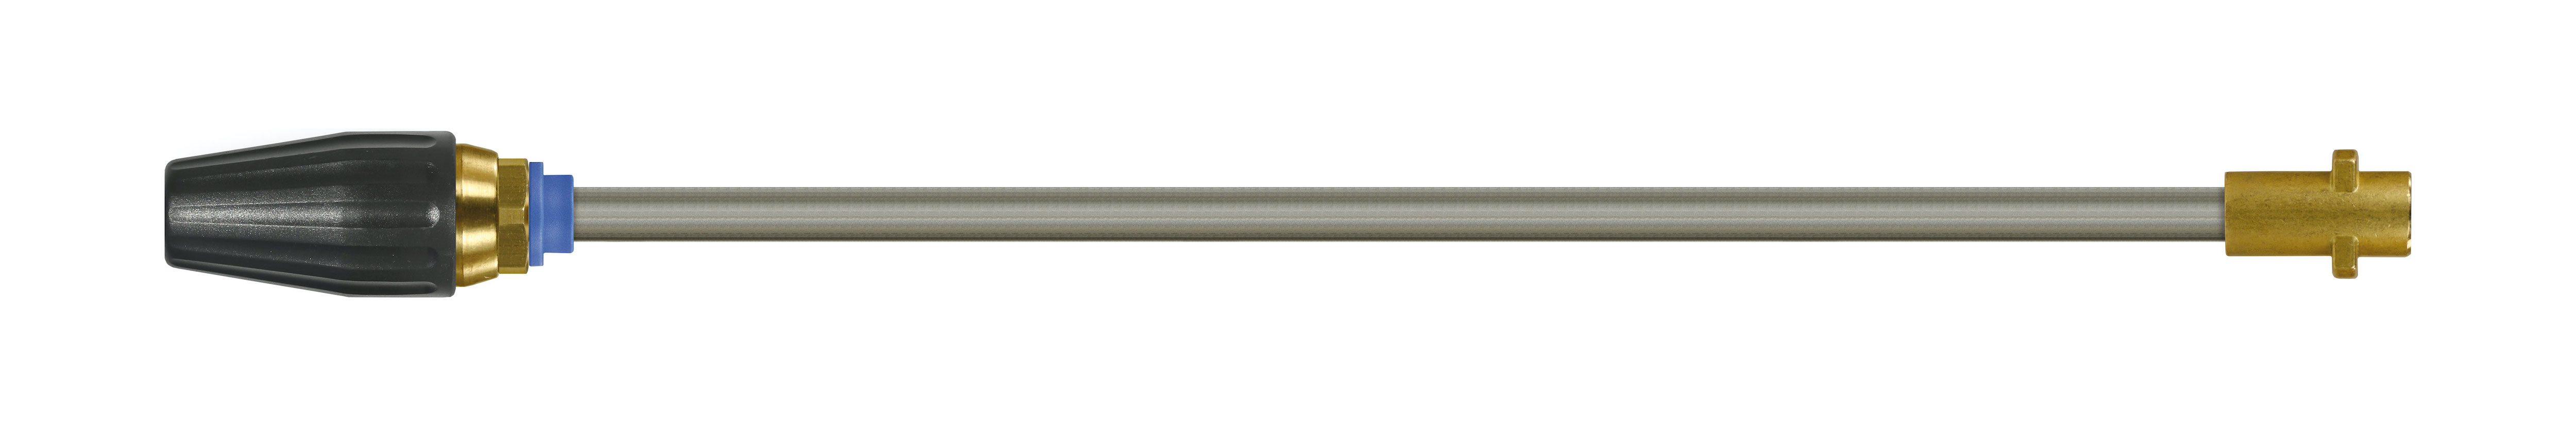 Rotabuse céramique avec lance 430mm, 100-250 bar, Calibre 065.